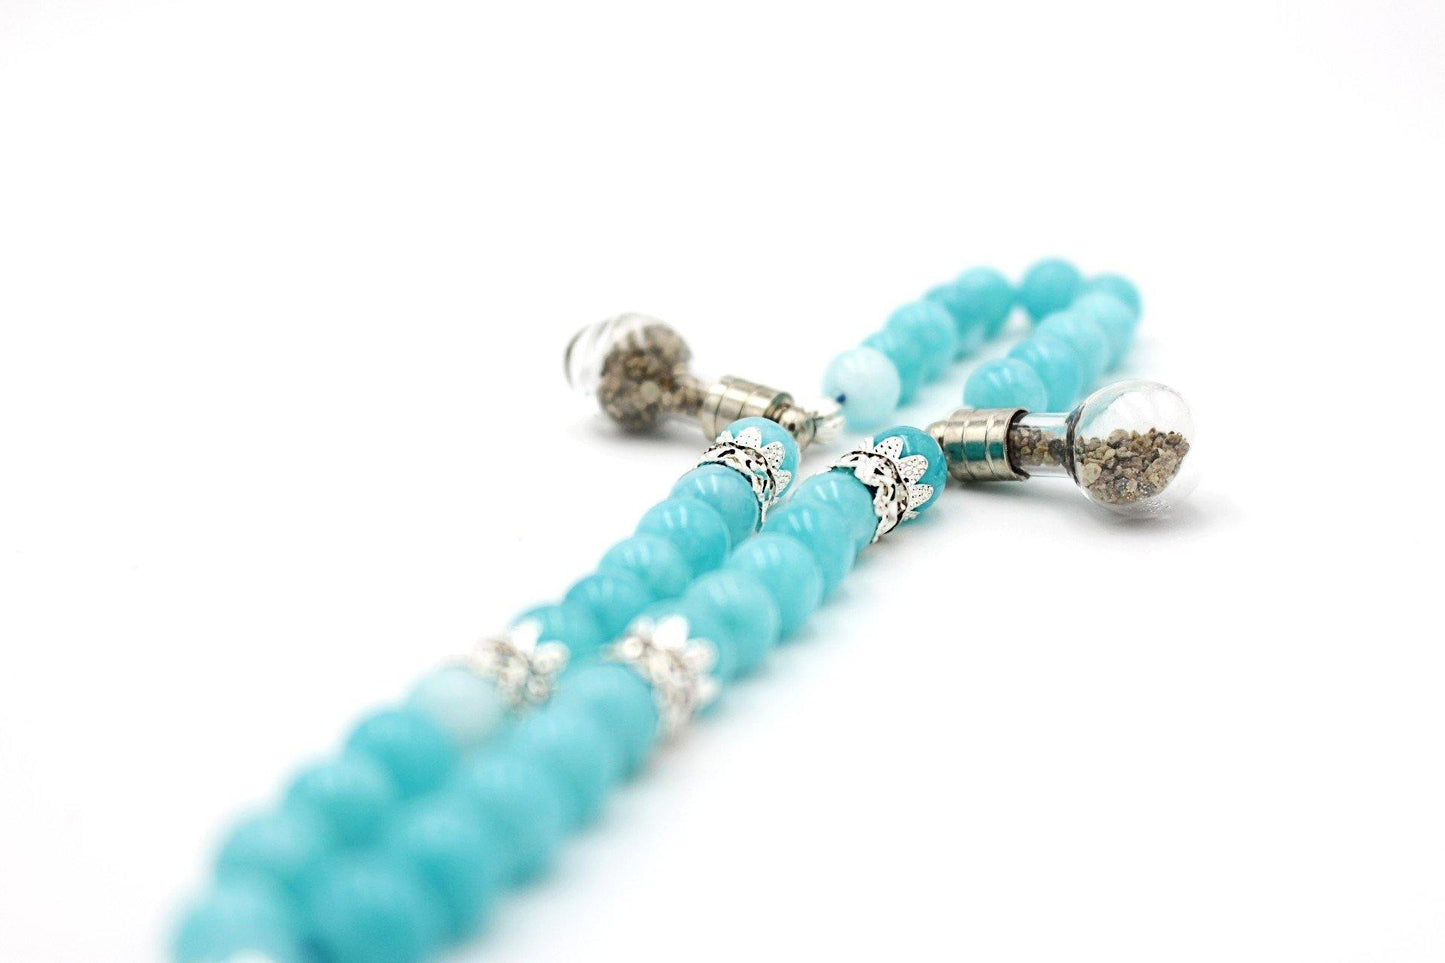 Aquamarine prayer beads gemstones silver jewellery luxury tesbih tasbeeh